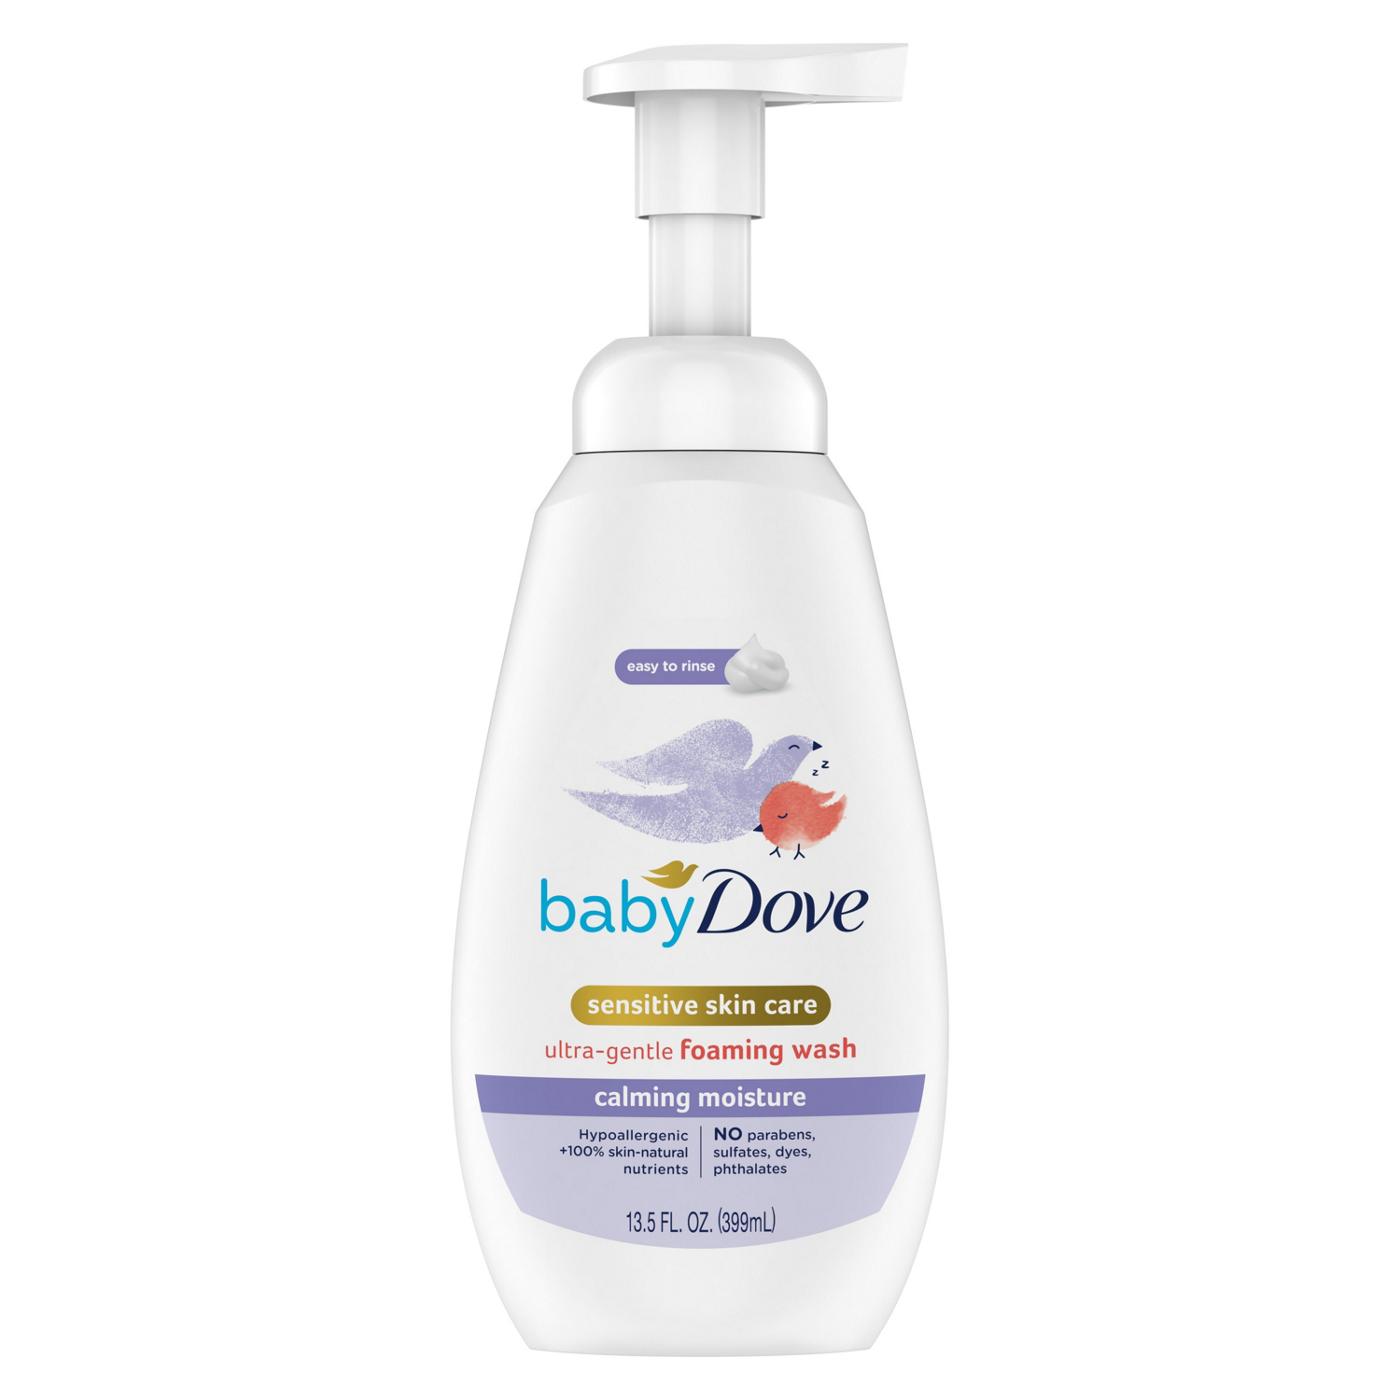 Baby Dove Sensitive Skin Care Foaming Wash - Calming Moisture; image 1 of 9